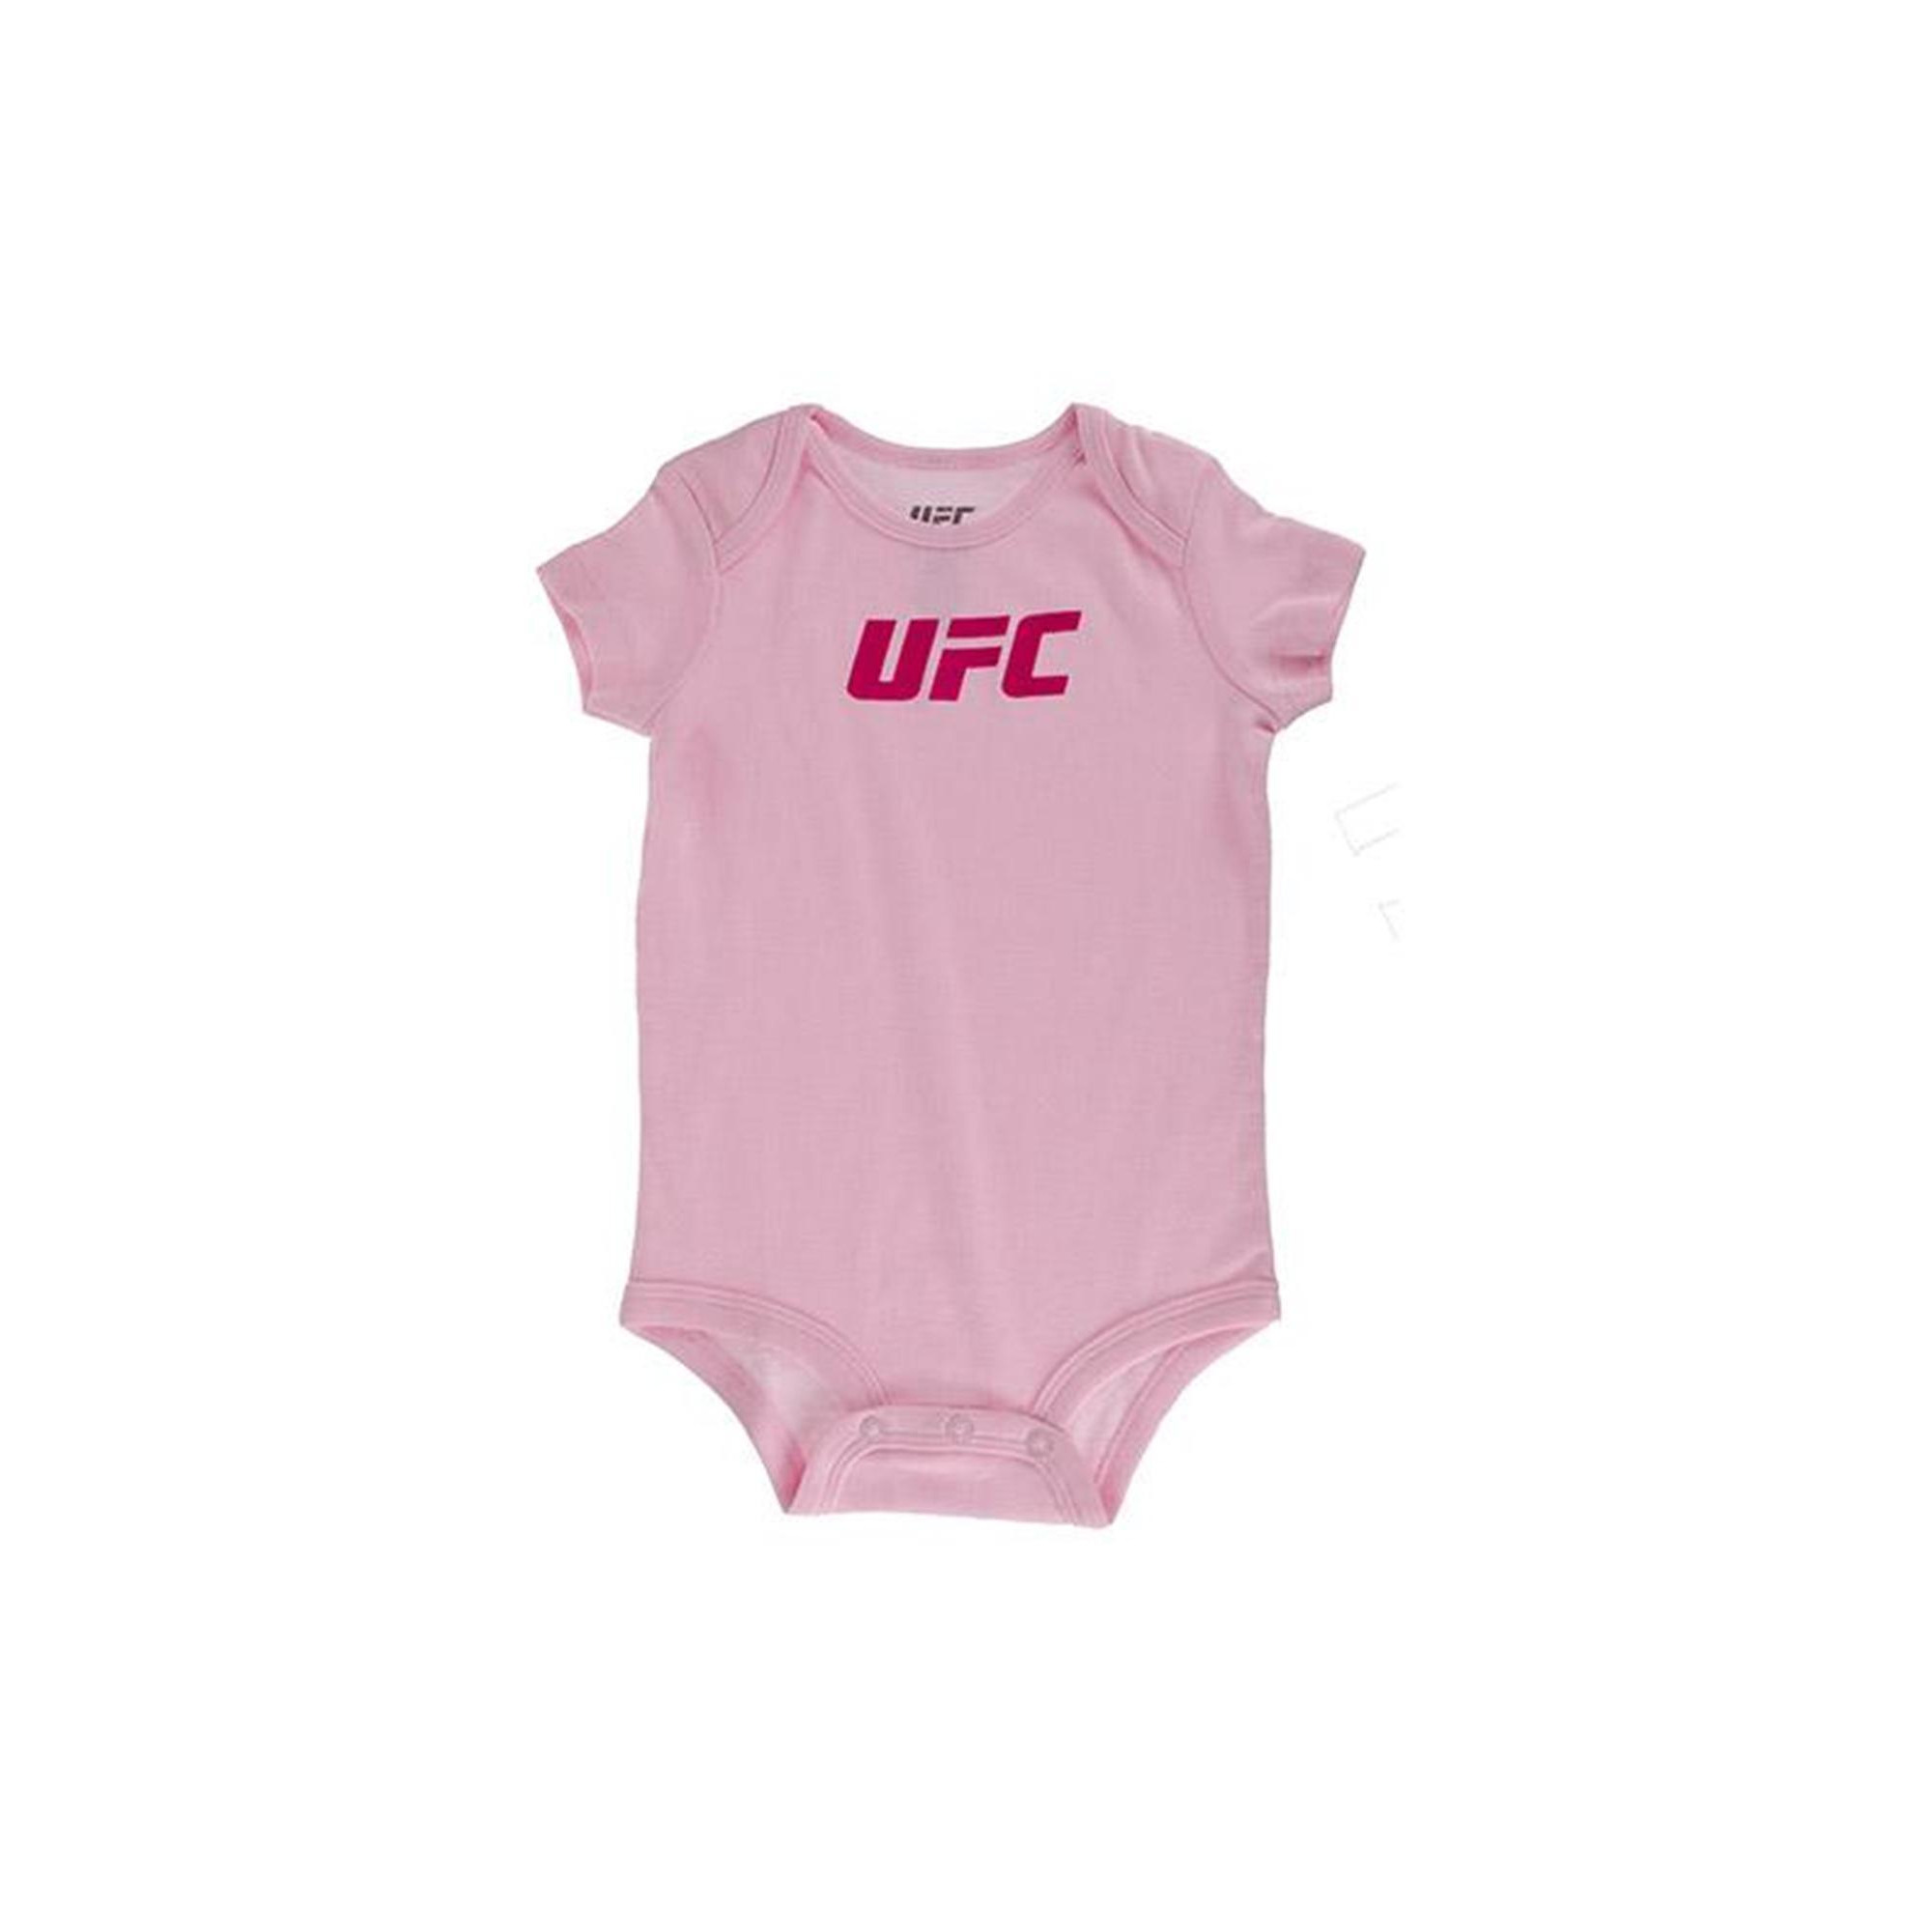 UFC Girls Creeper Bodysuit Jumpsuit, Style # 30680